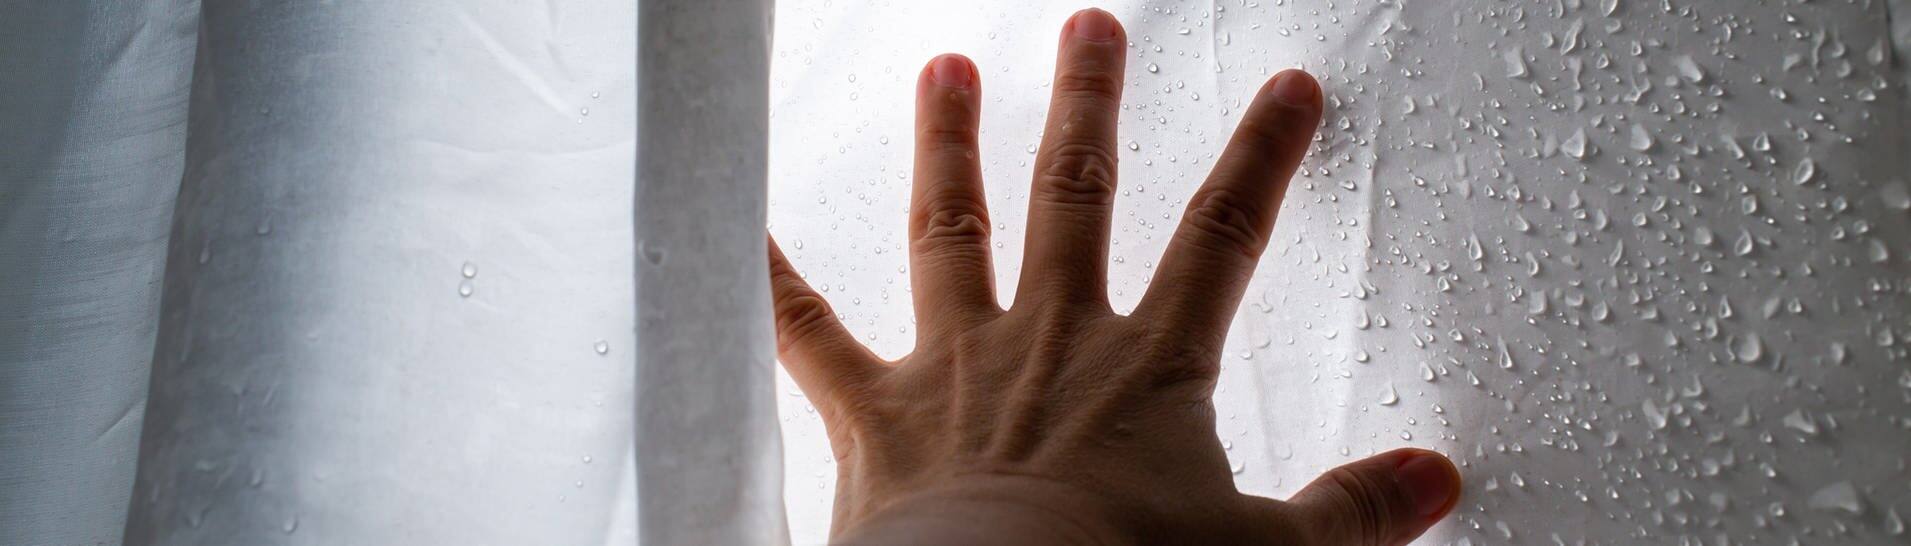 Hand am nassen Duschvorhang (Foto: Adobe Stock/eyepark)